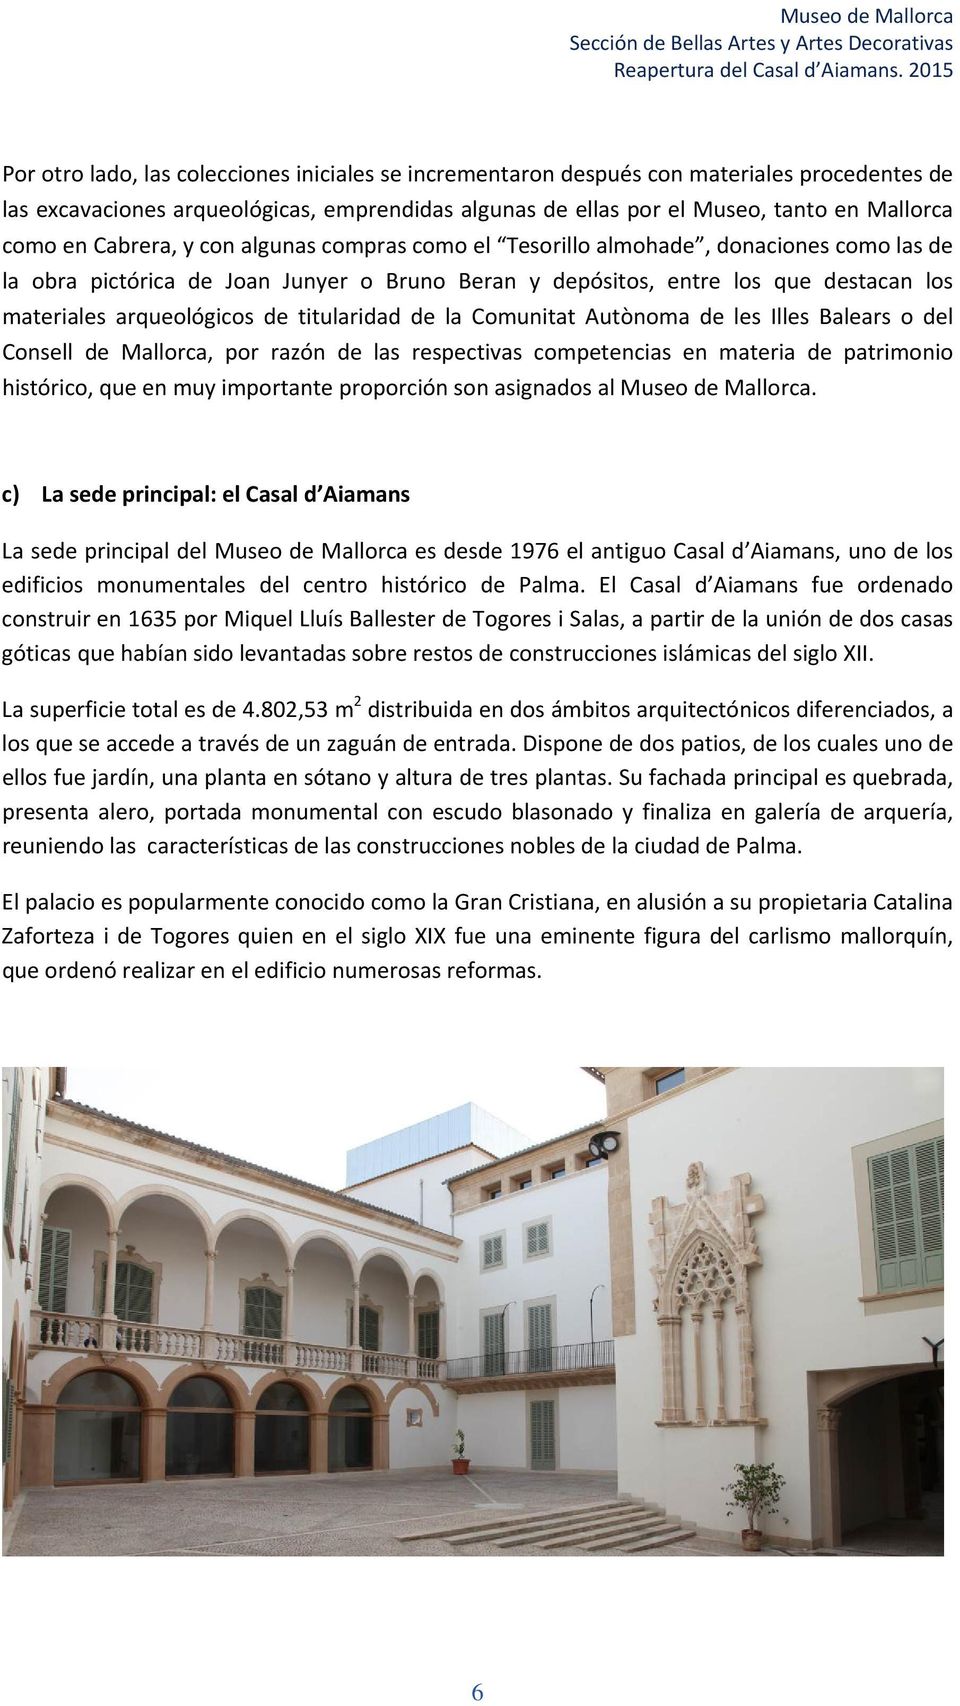 titularidad de la Comunitat Autònoma de les Illes Balears o del Consell de Mallorca, por razón de las respectivas competencias en materia de patrimonio histórico, que en muy importante proporción son